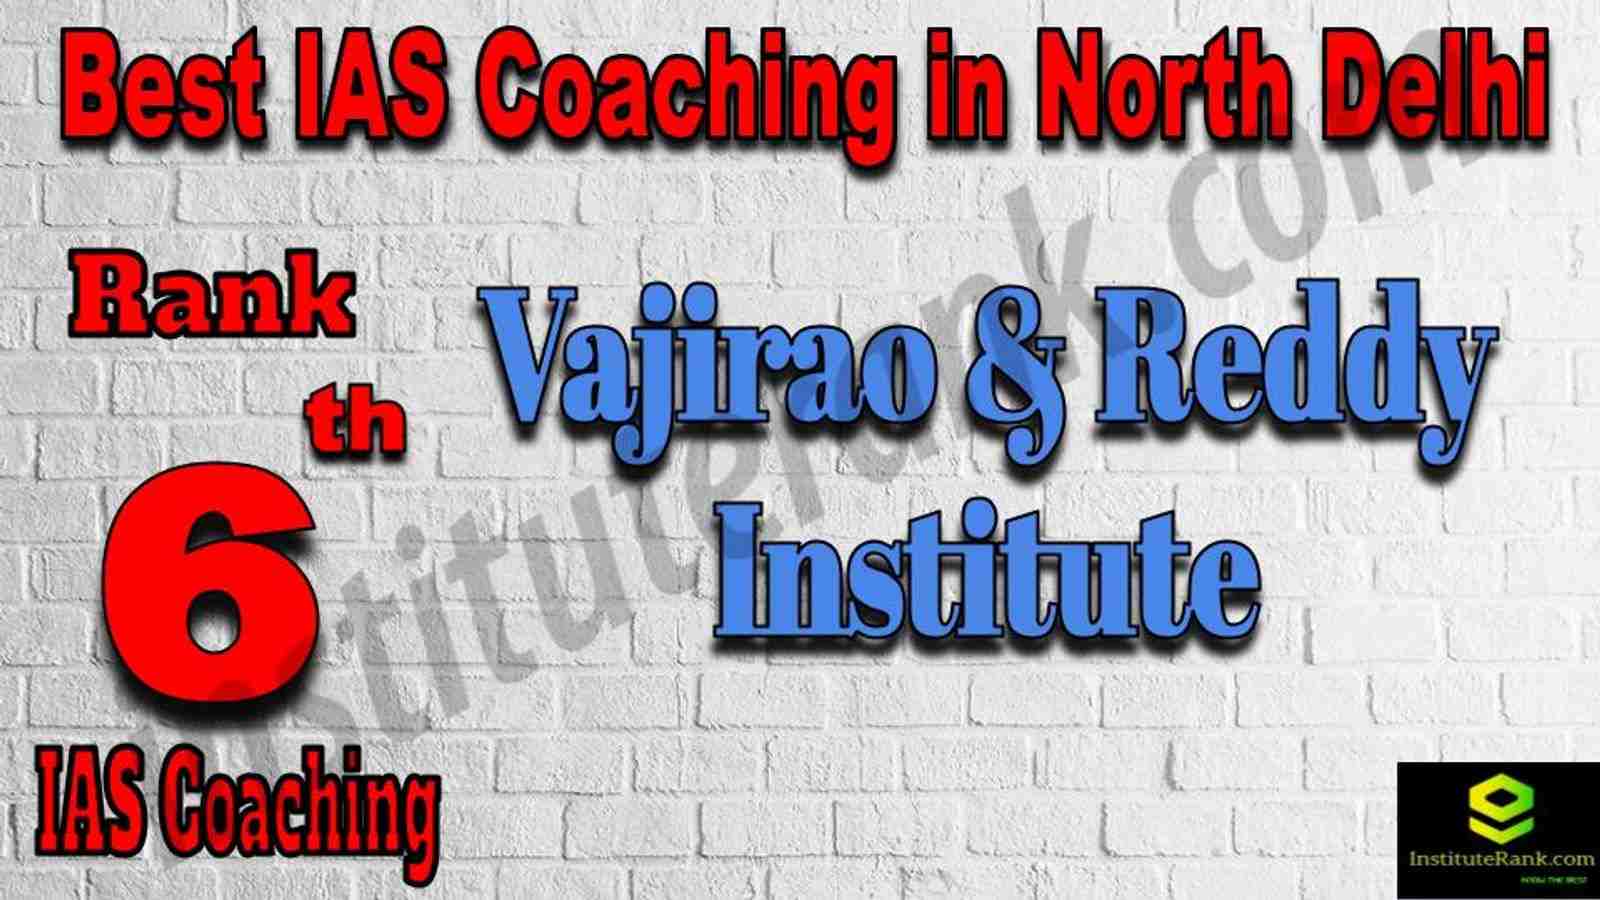 6th Best IAS Coaching in North Delhi